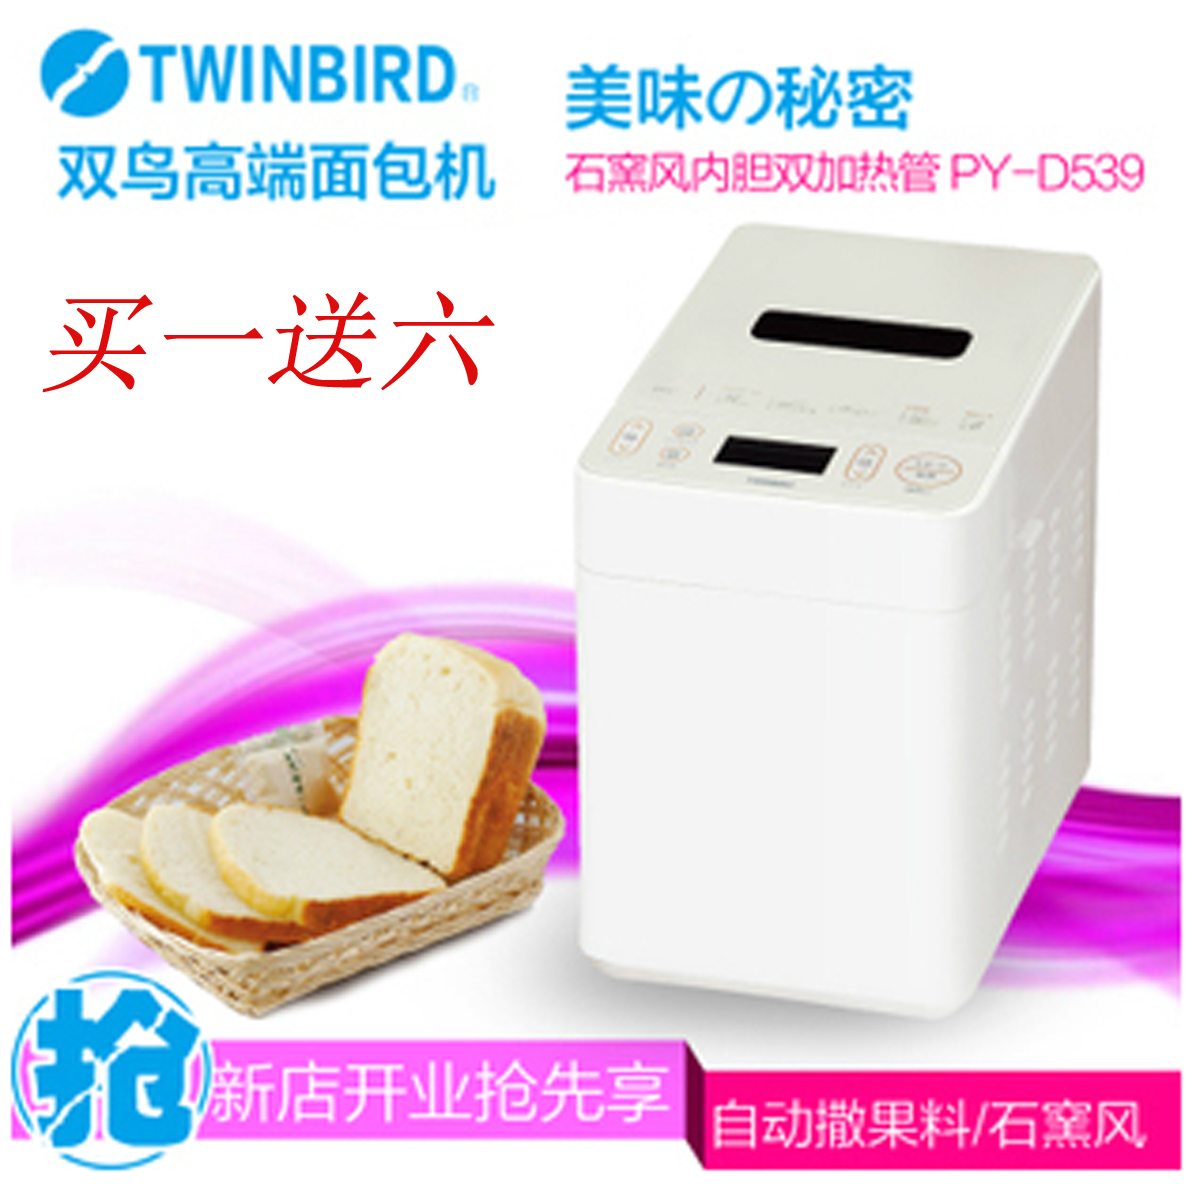 TWINBIRD/双鸟 PY-D539日本全智能面包机年糕糯米面团自动投料